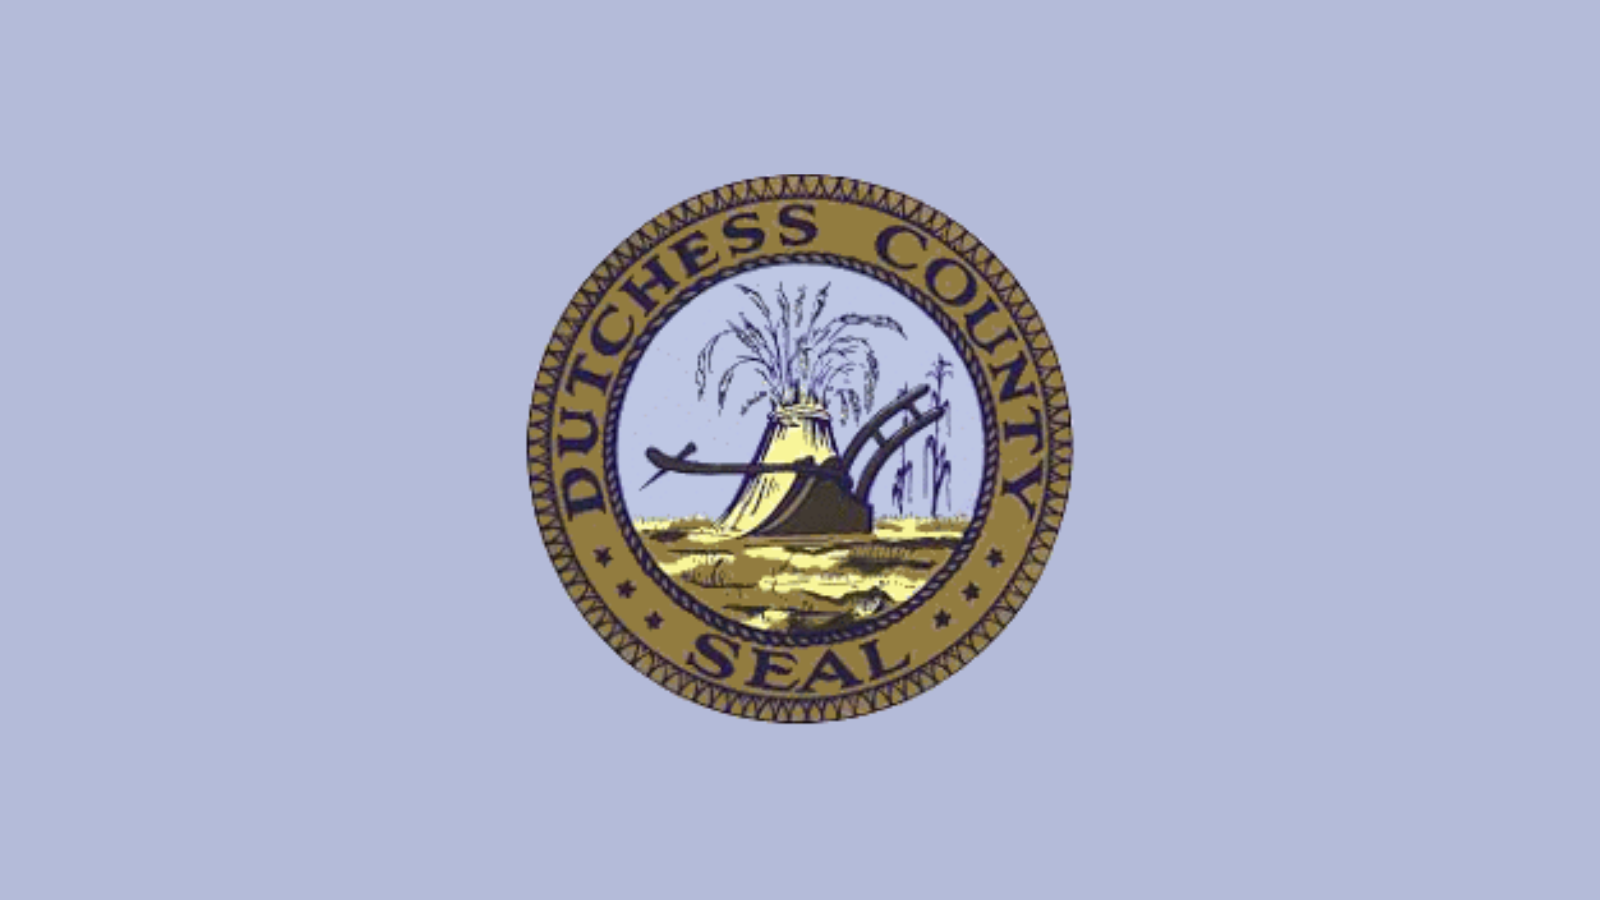 Dutchess County Seal